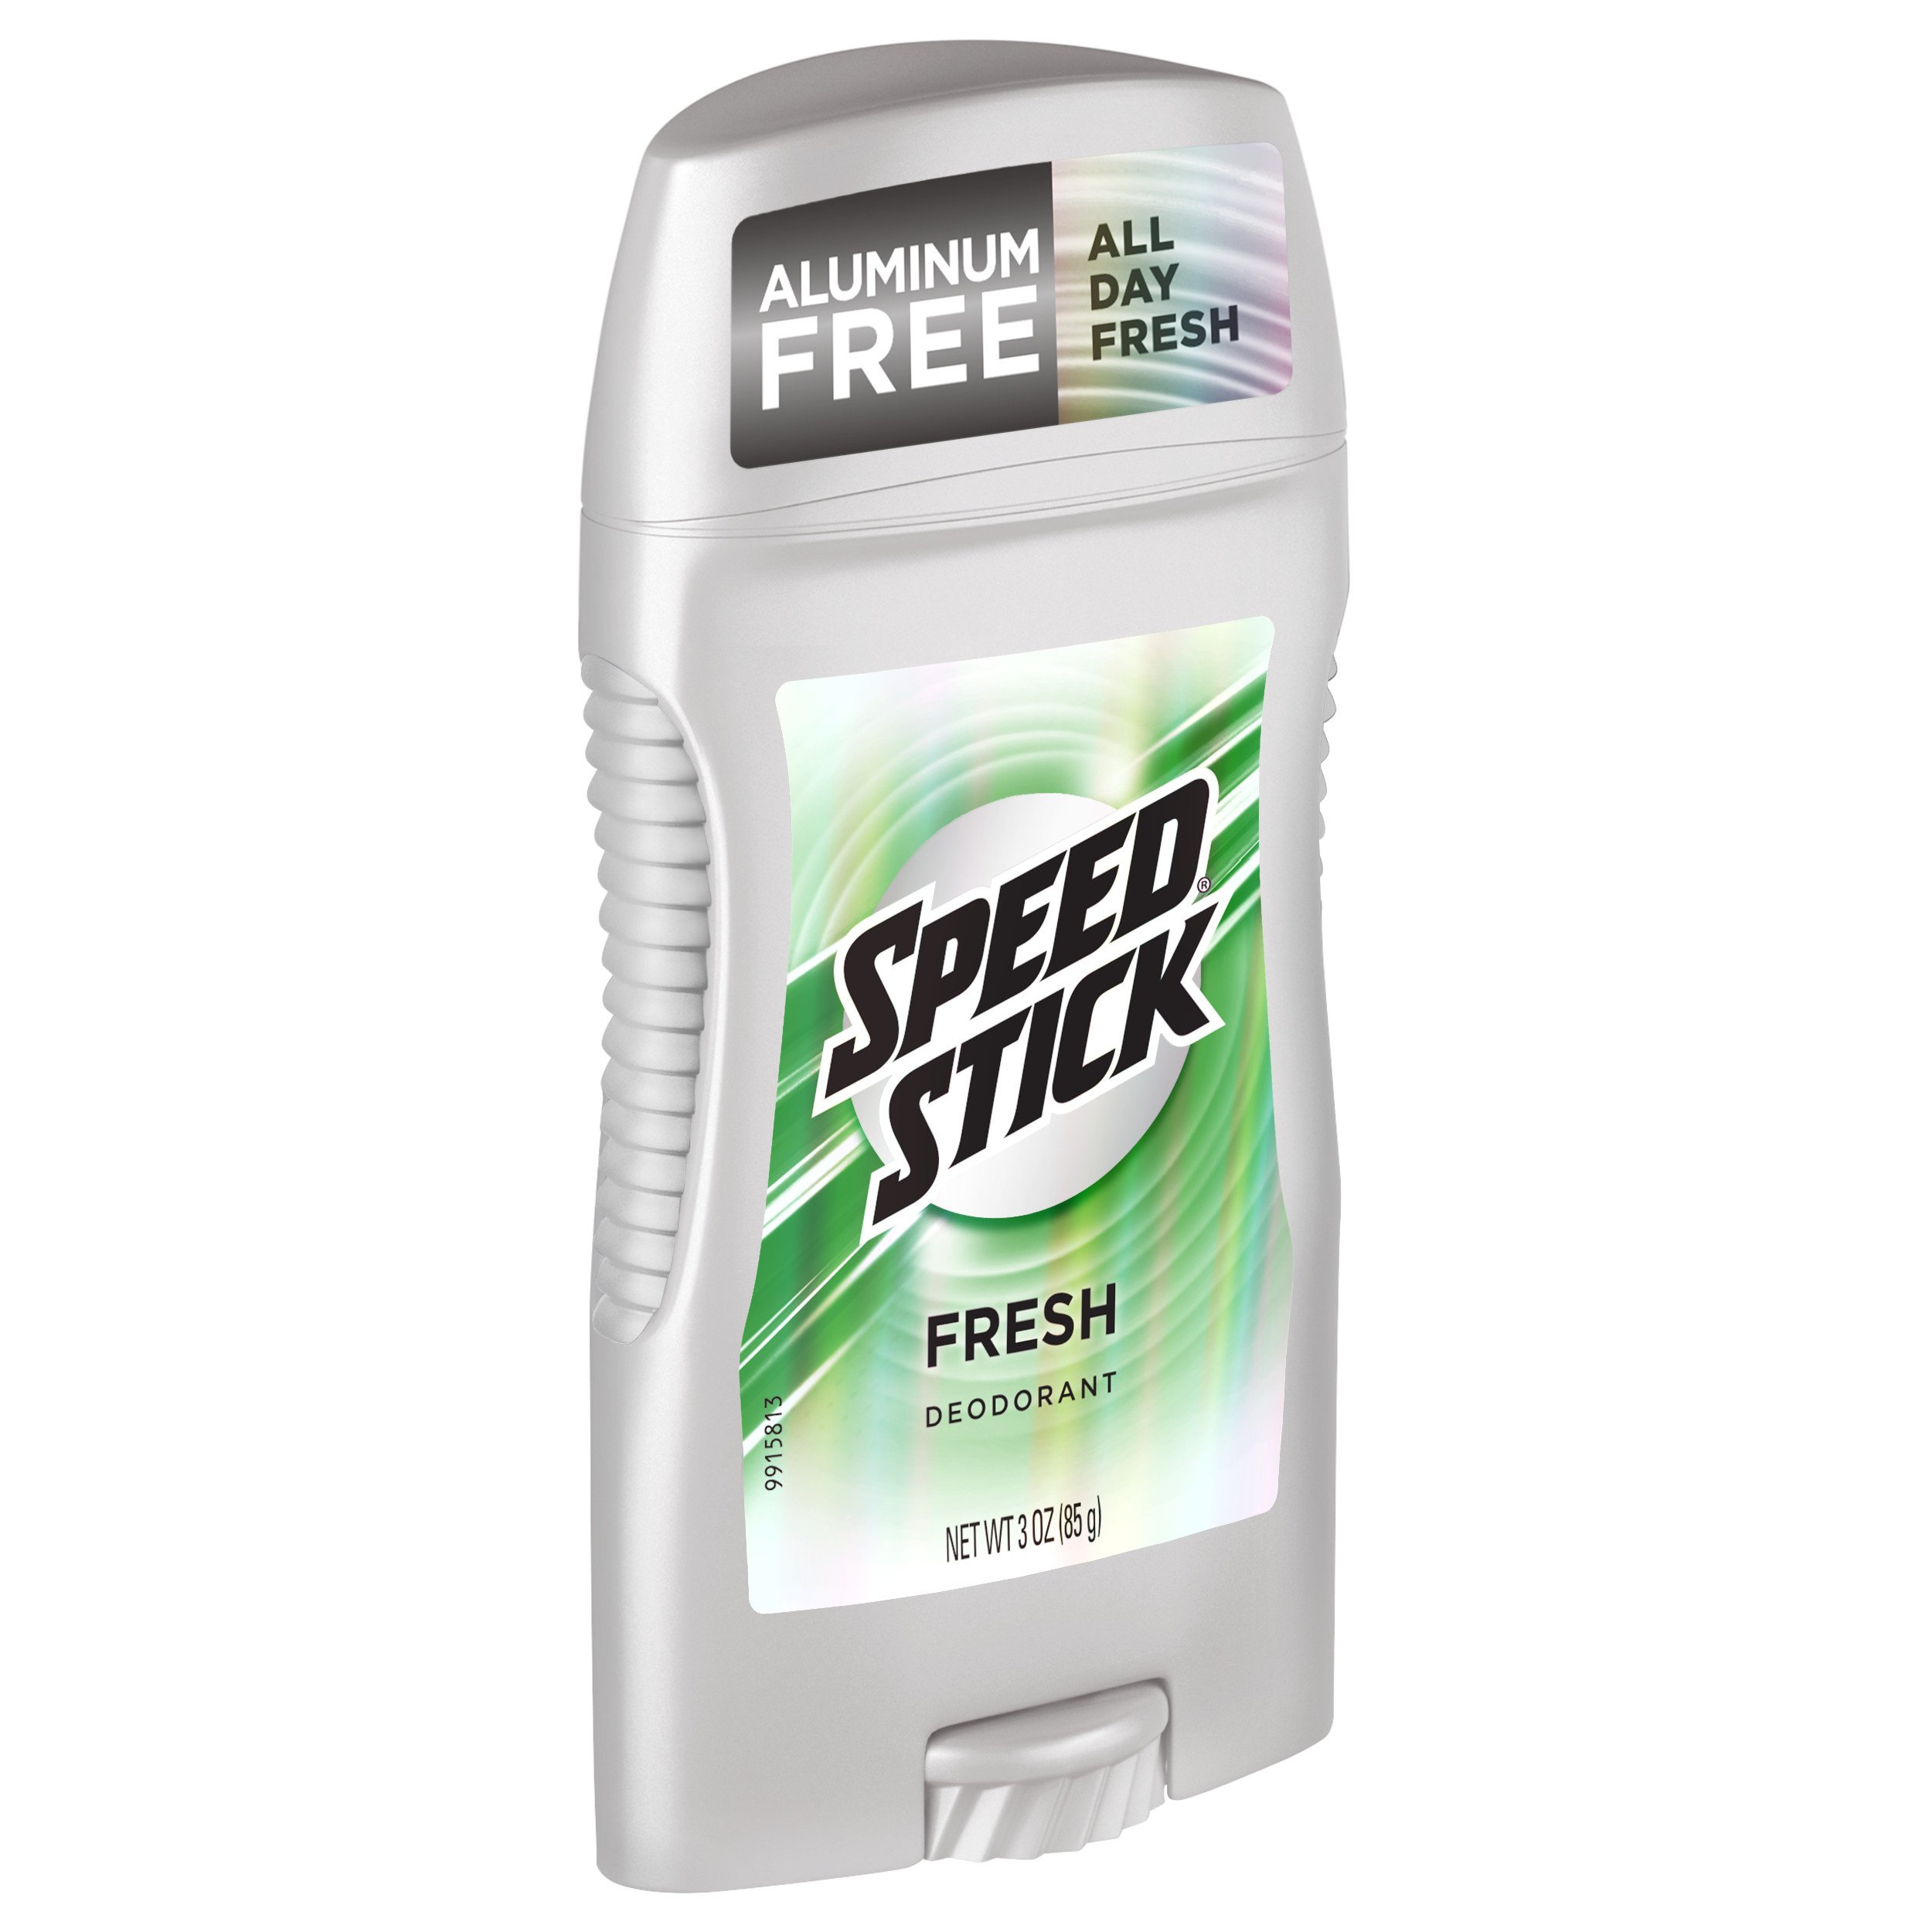 Актив стик. Mennen Speed Stick Regular Deodorant. Active Fresh дезодорант. Mennen Speed Stick лосьон после бритья. Дезодорант серф.